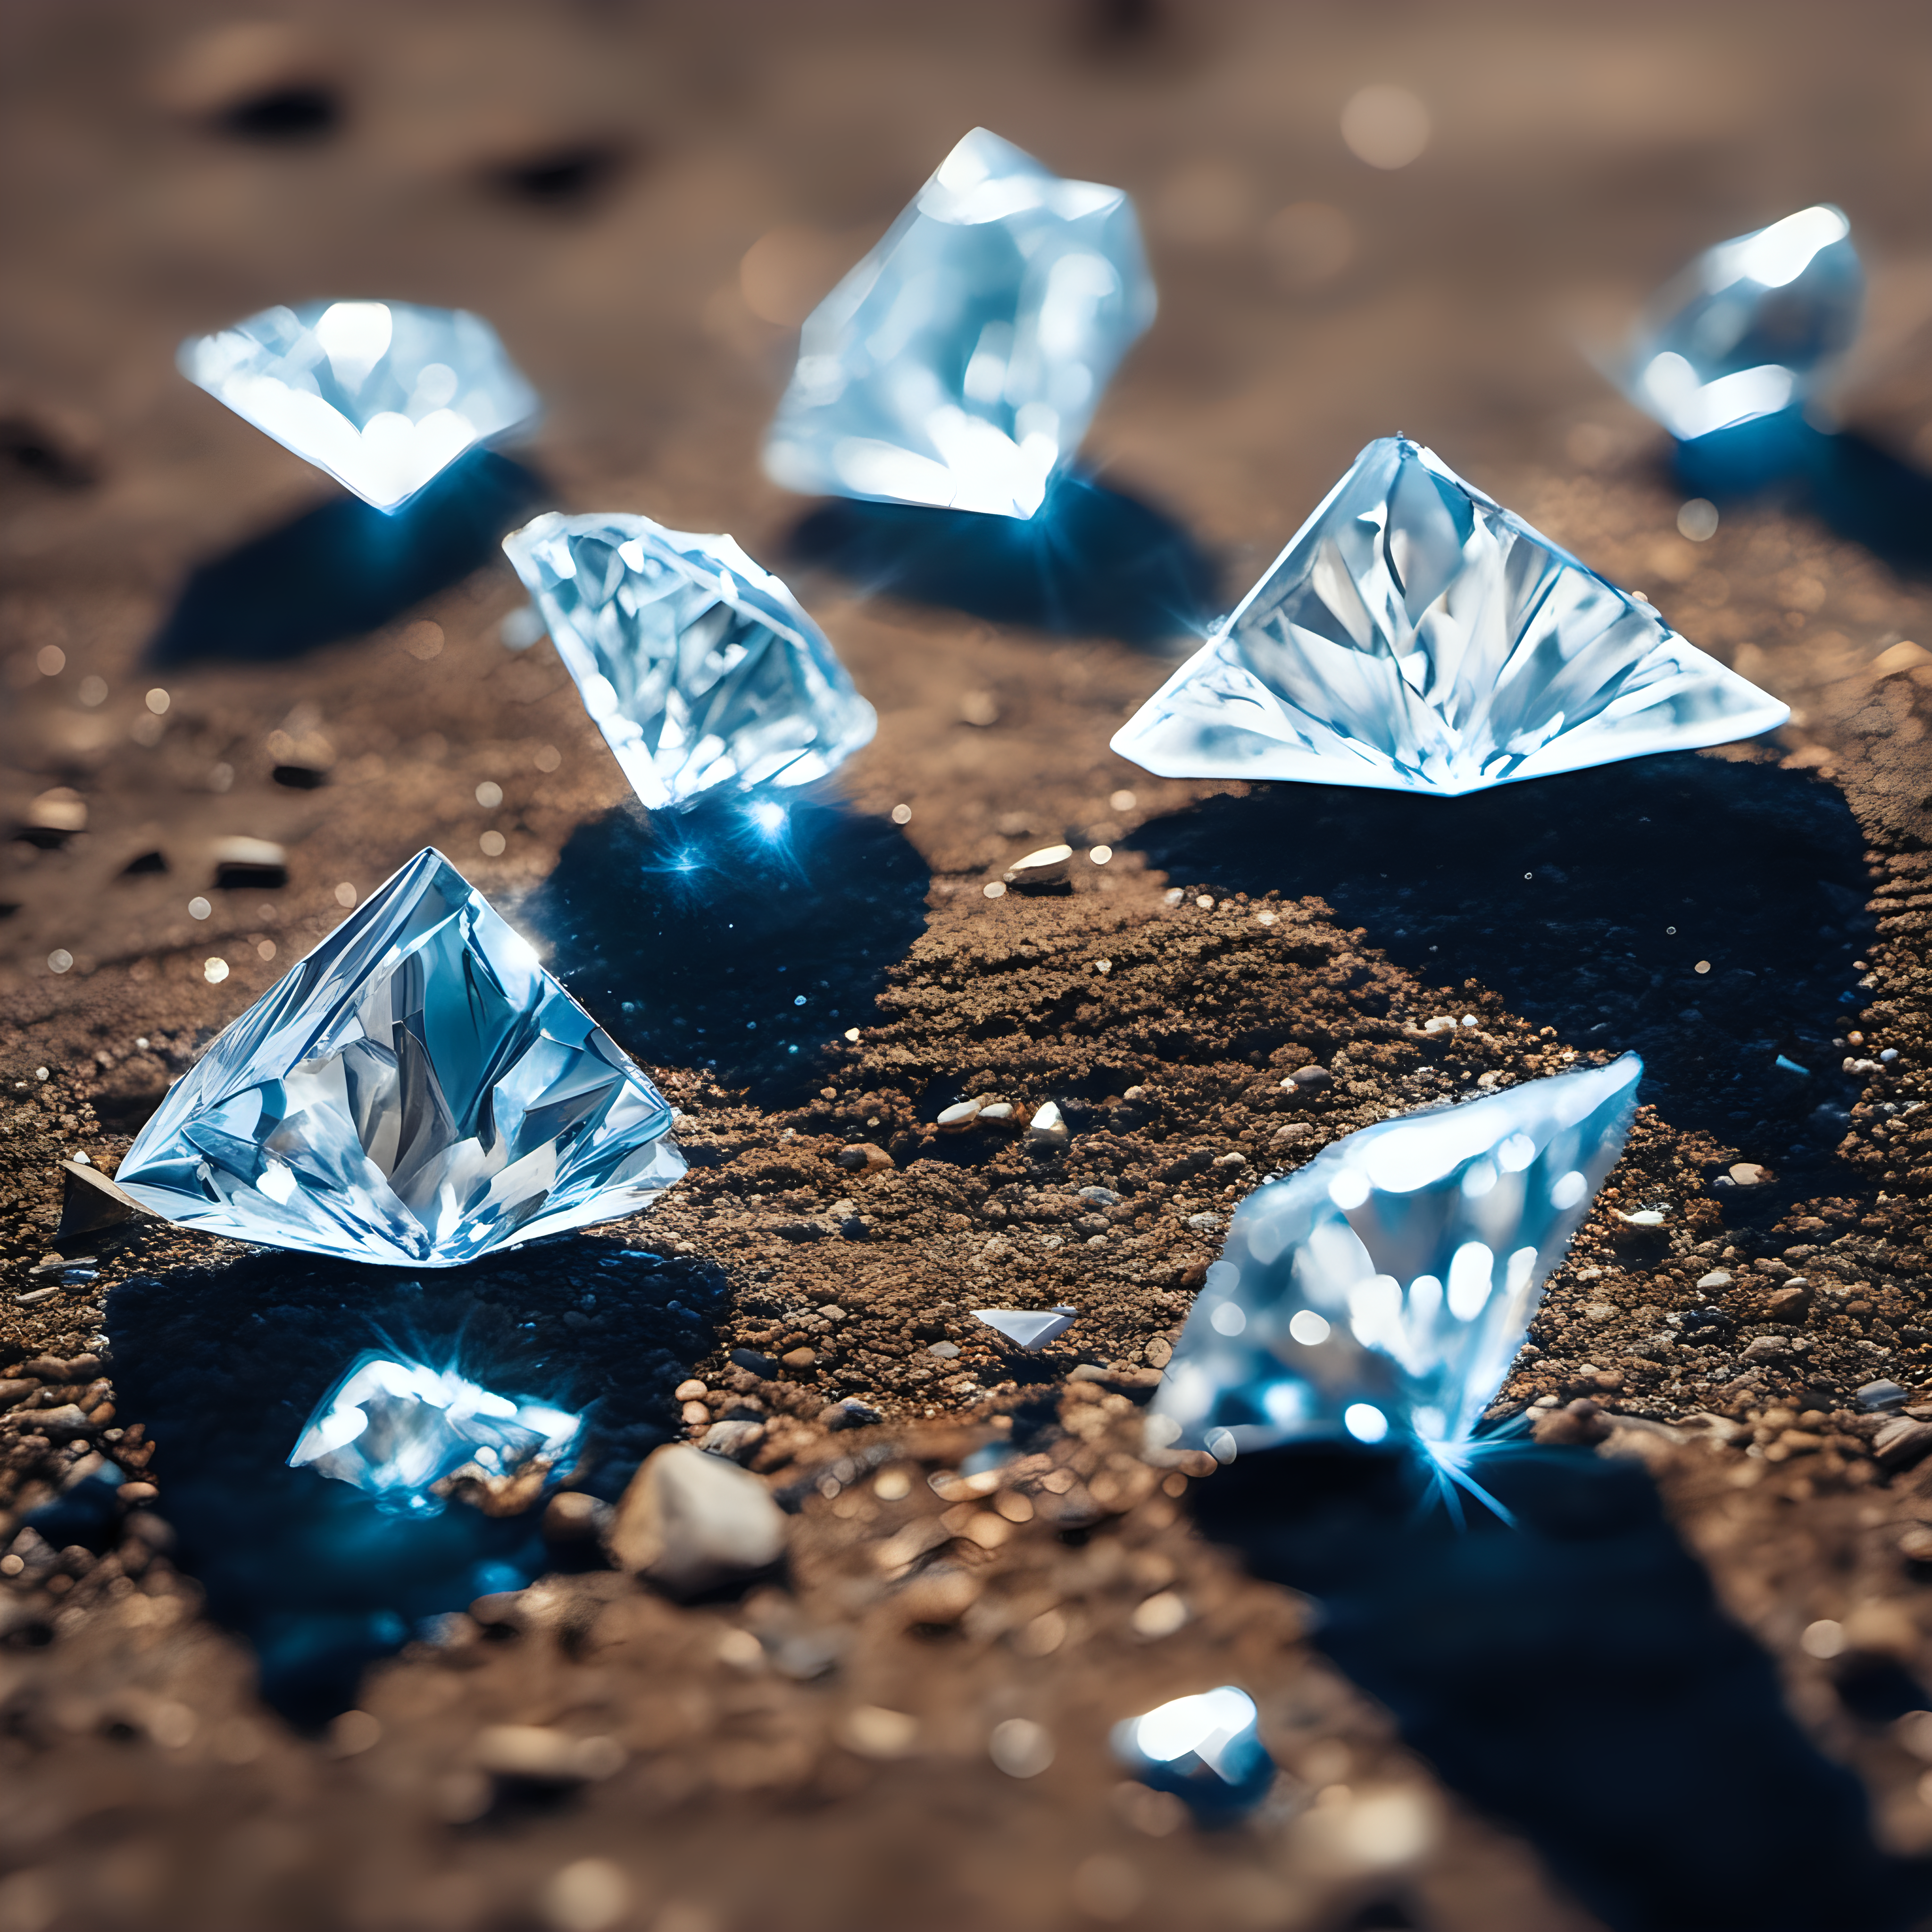 7 diamond shards on the ground